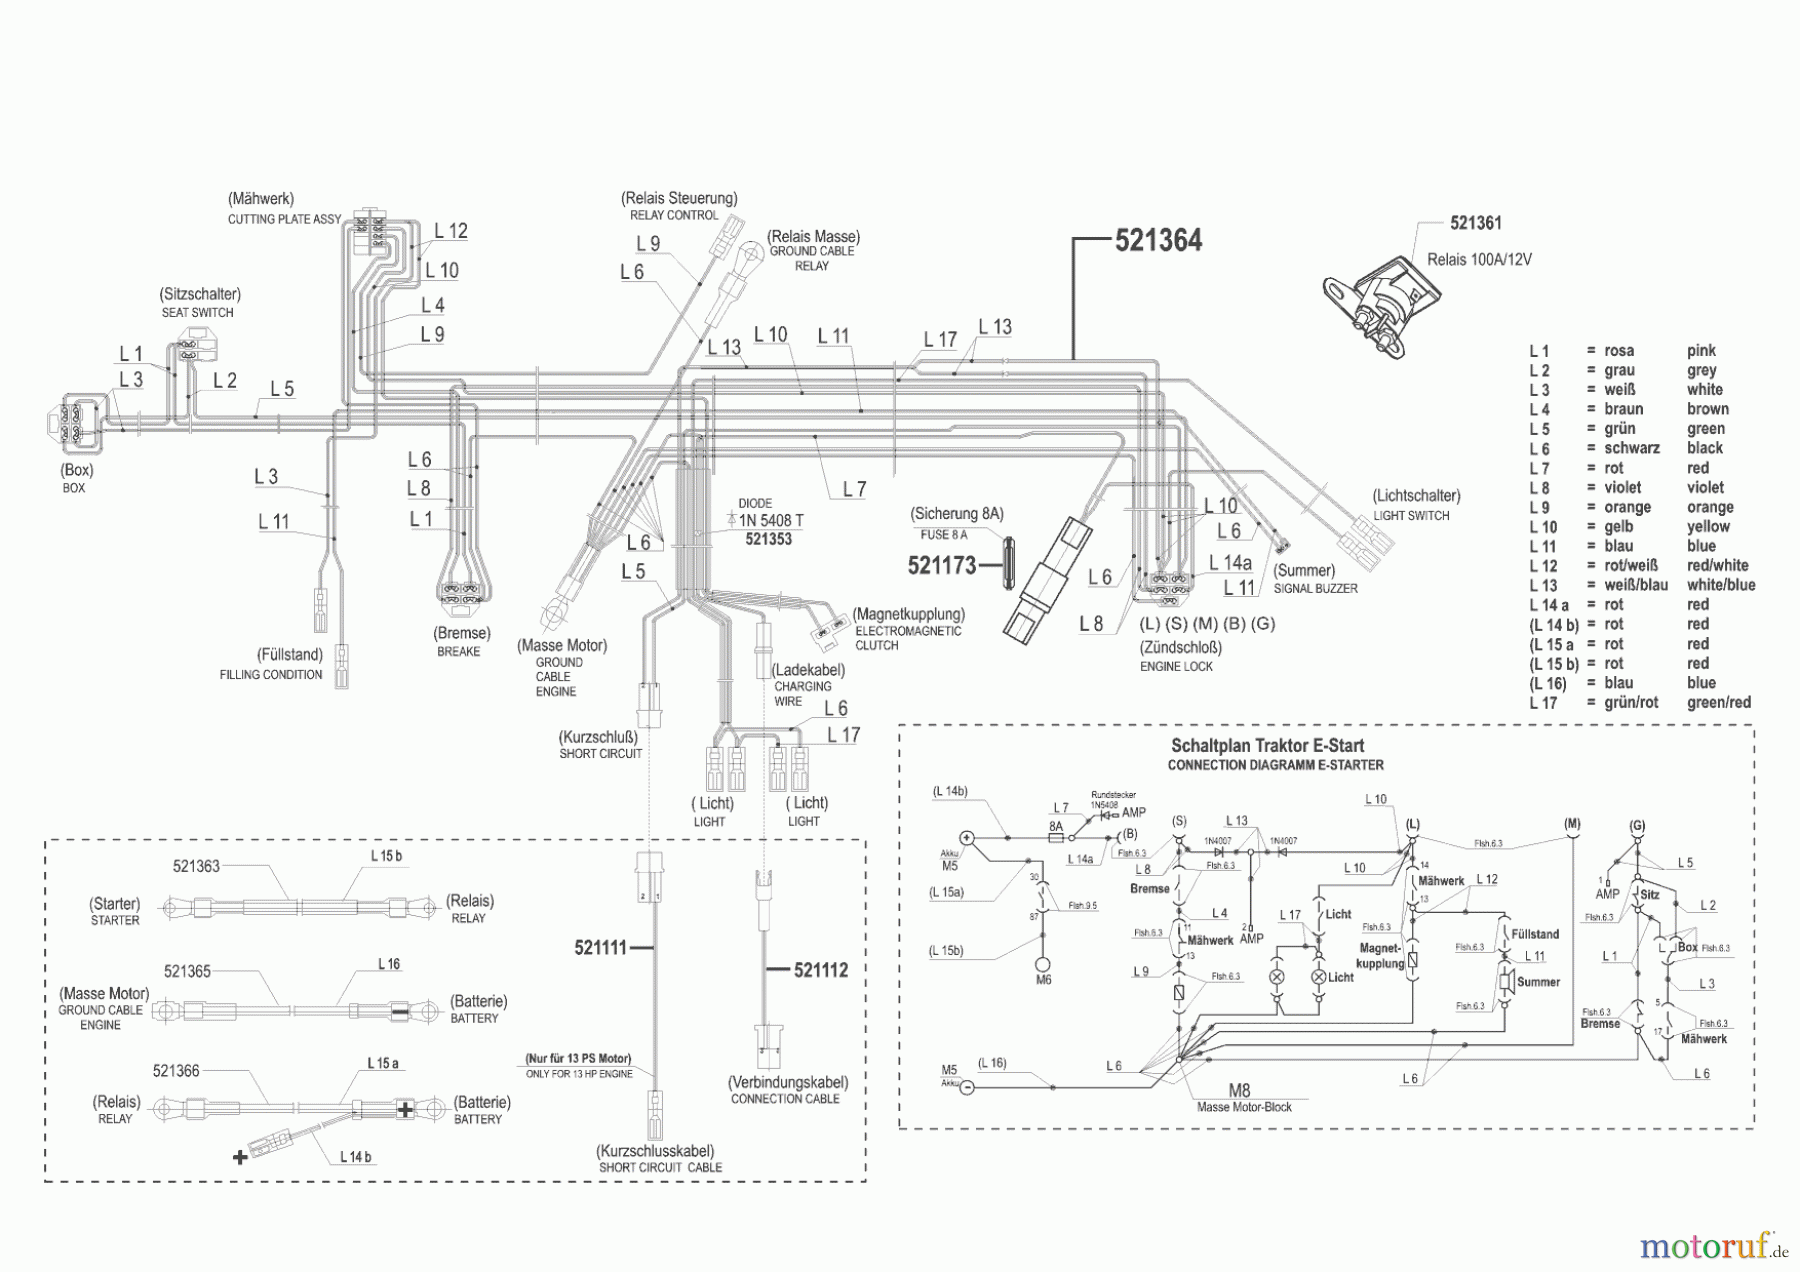  Concord Gartentechnik Rasentraktor T13-102 MAS  10/2002 Seite 8